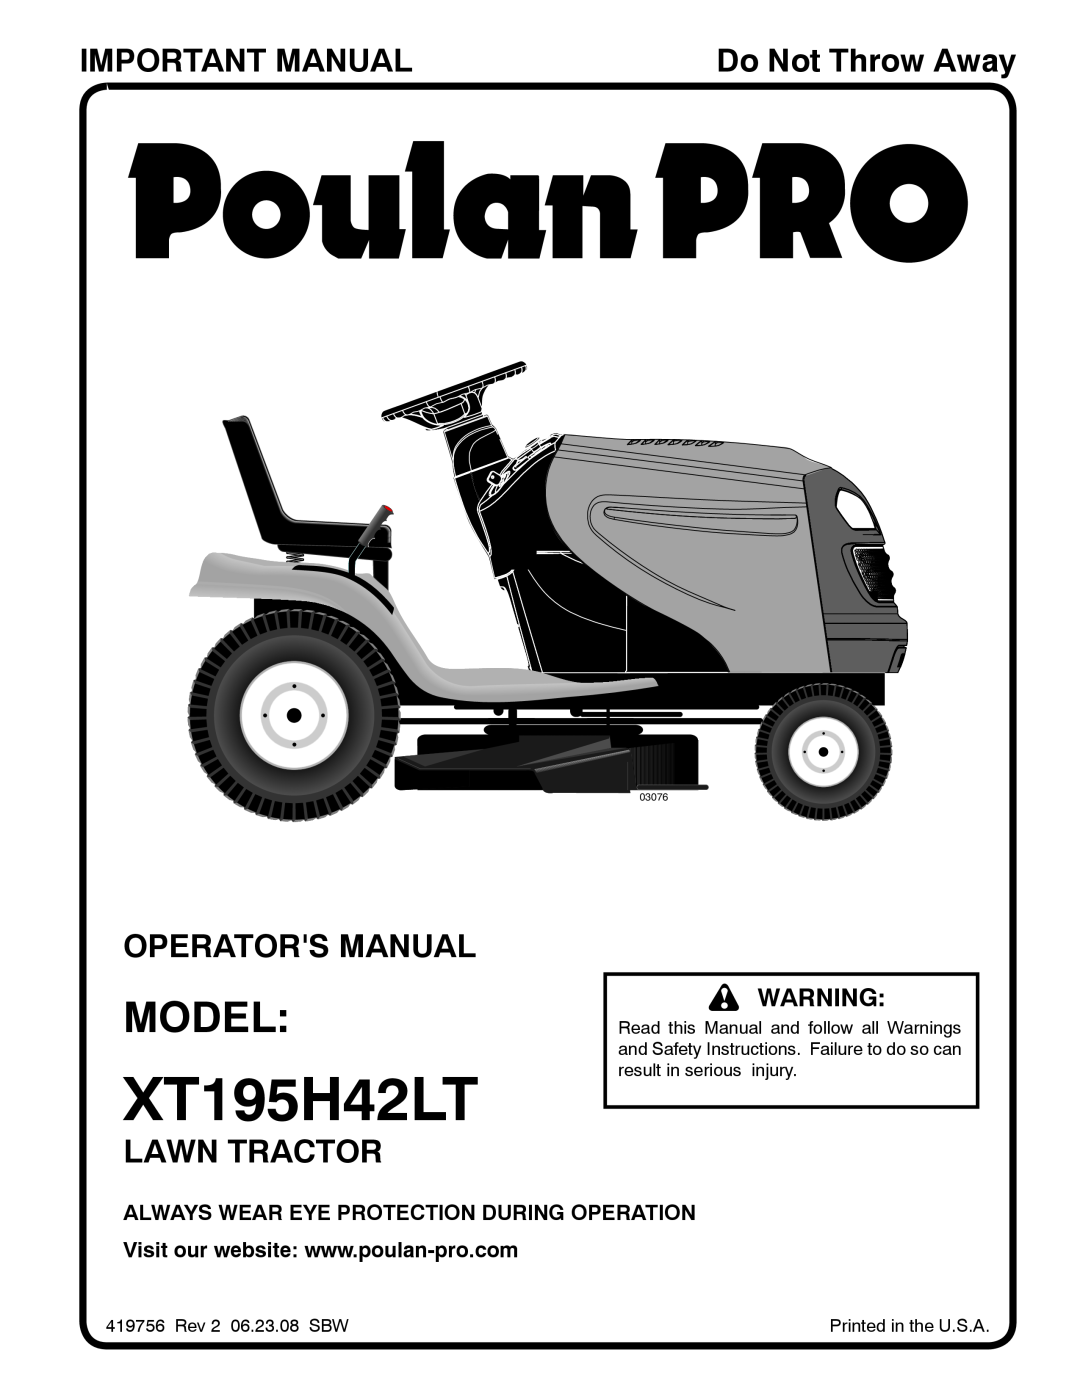 Poulan XT195H42LT manual Model, Important Manual, Operators Manual, Lawn Tractor, Do Not Throw Away, 03076 